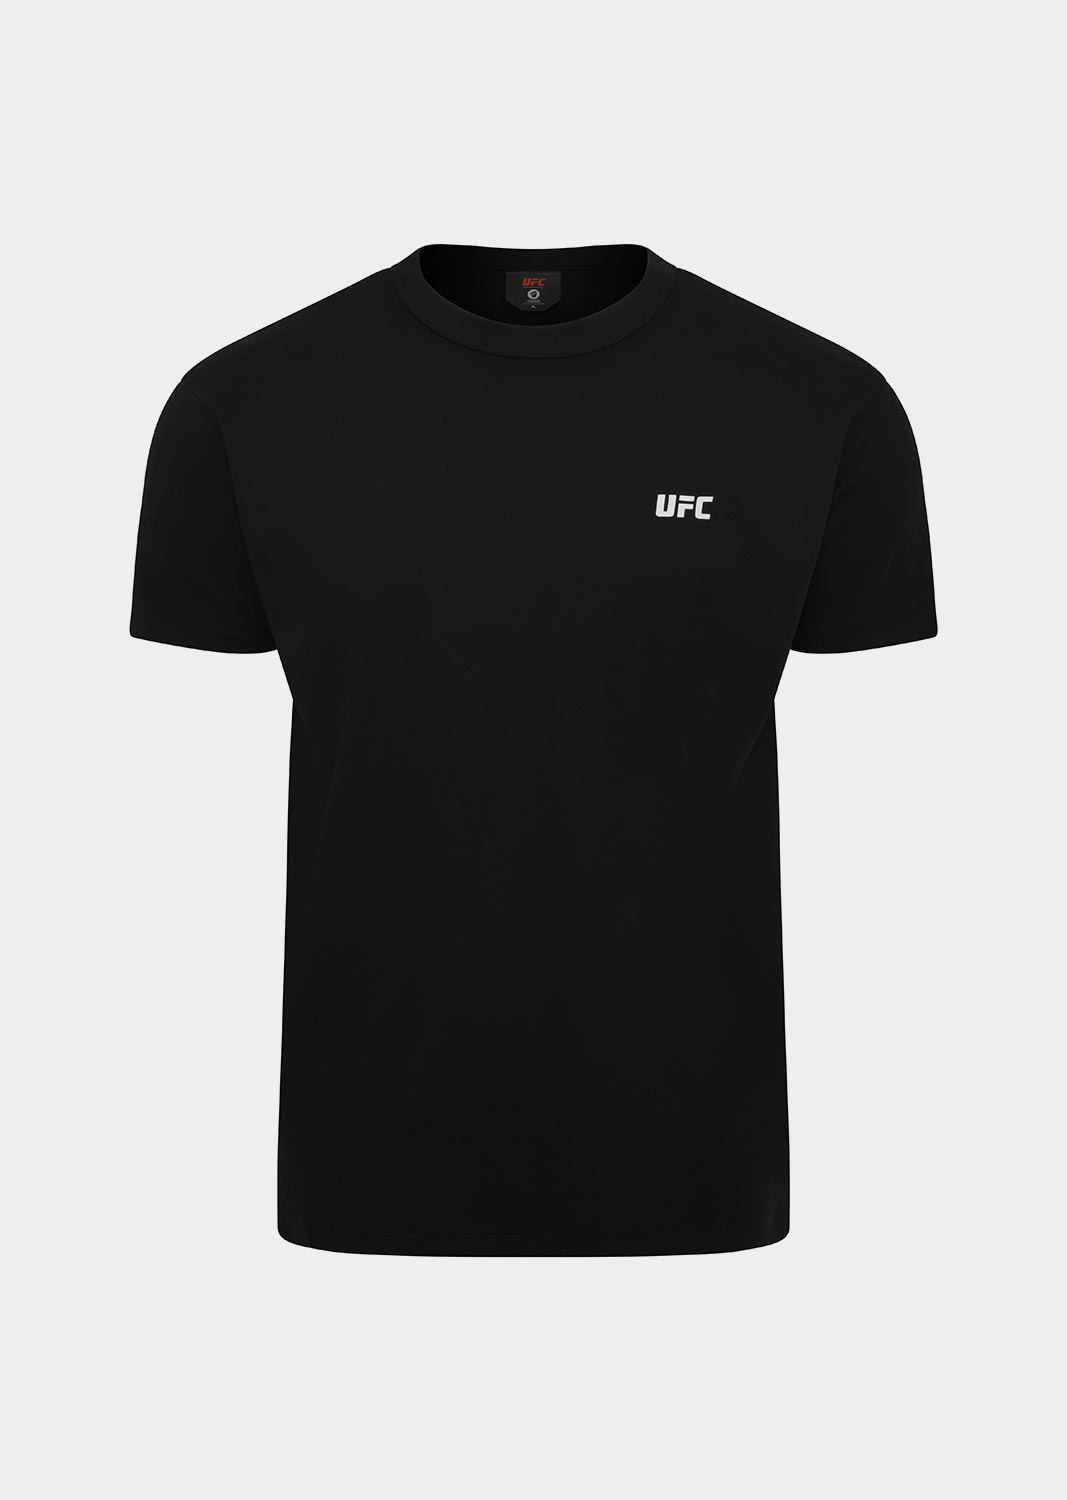 UFC 피지컬 레귤러핏 반팔 티셔츠 블랙 U2SSV2132BK